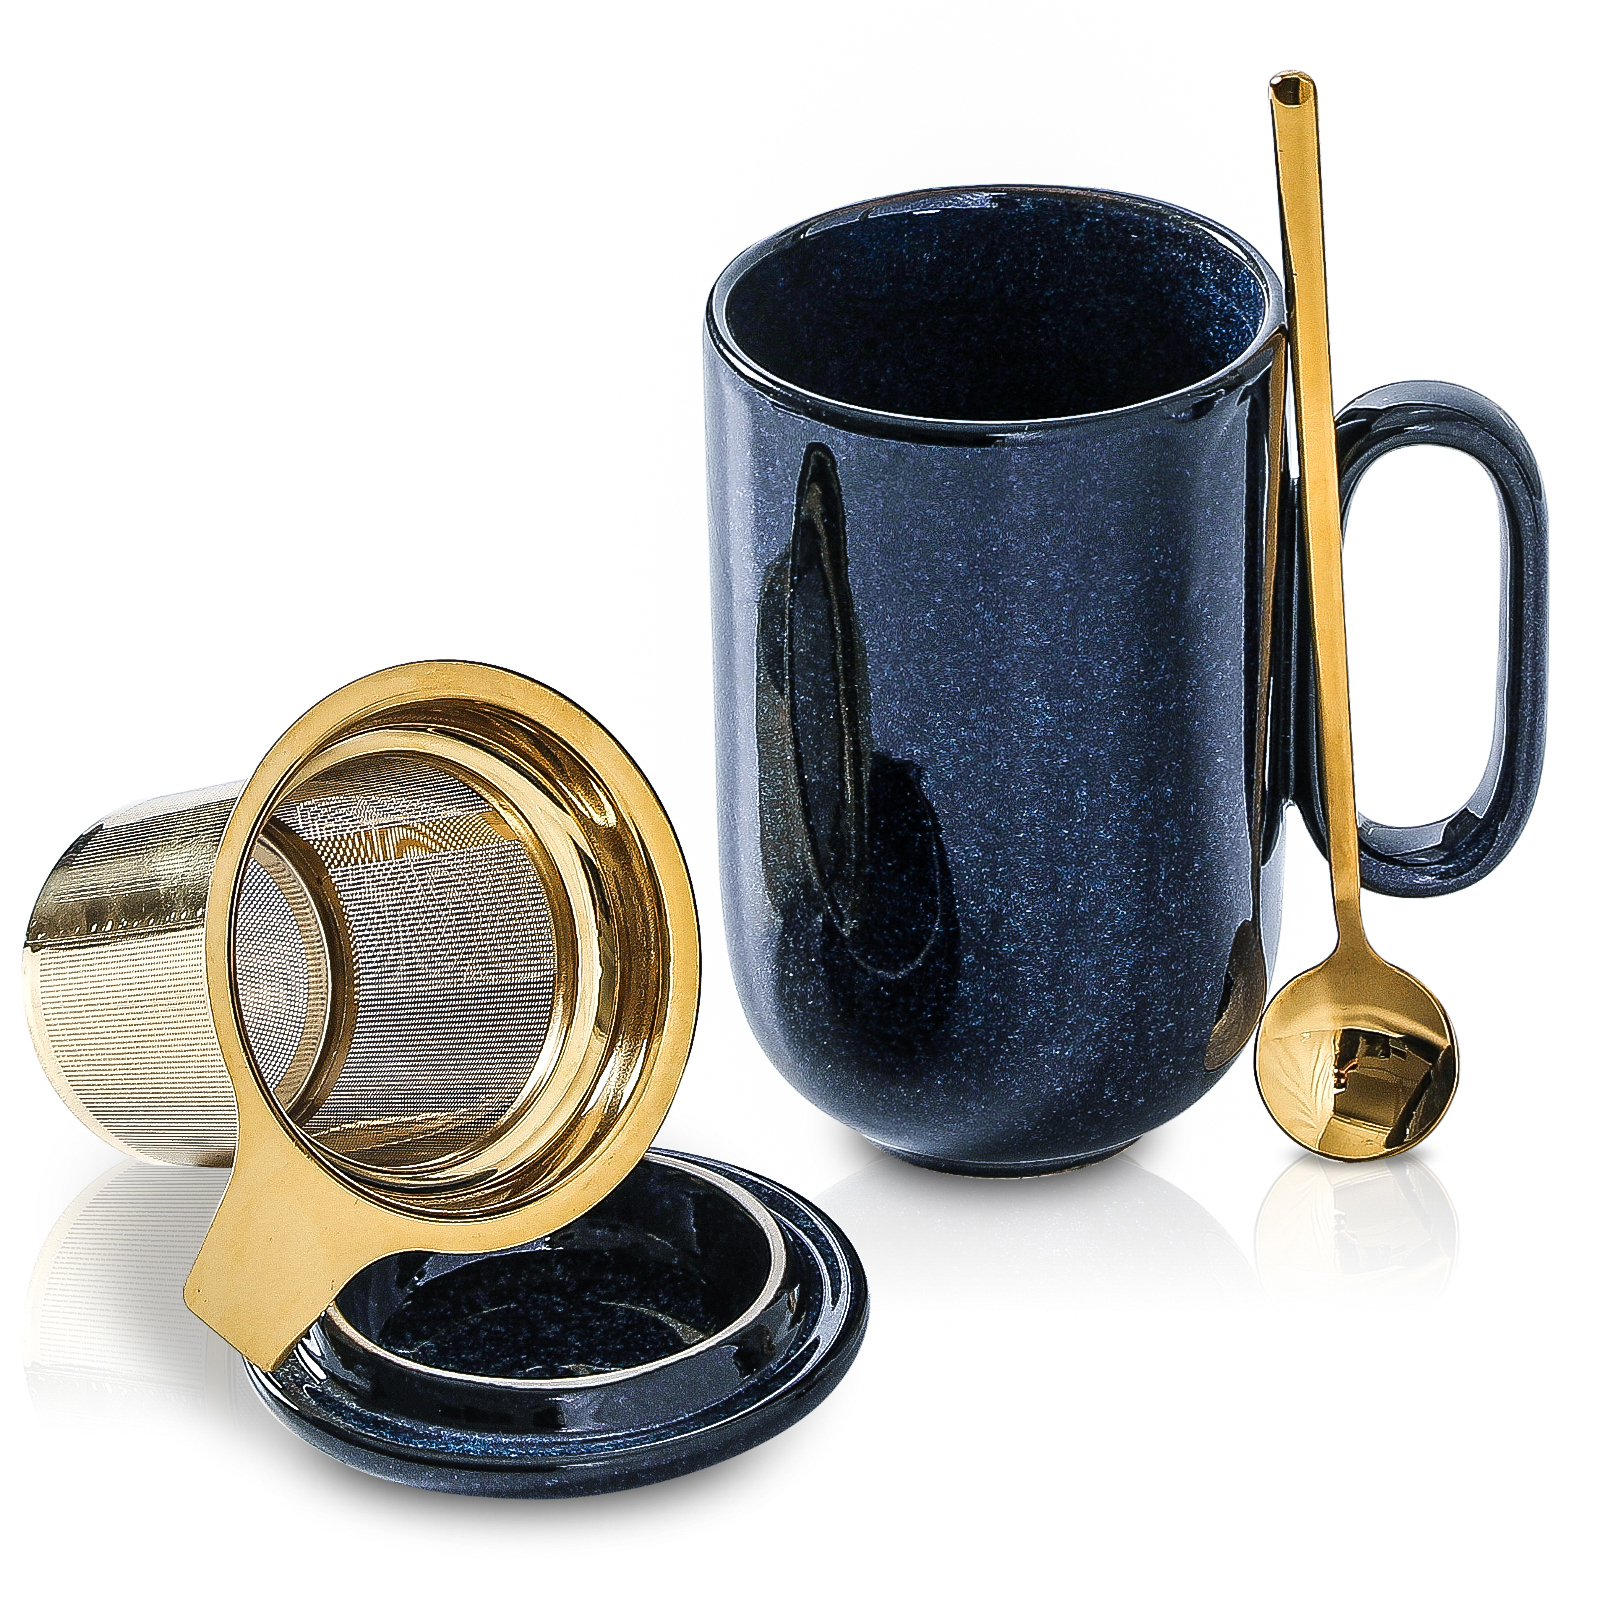 https://www.vicrays.com/wp-content/uploads/2022/07/1-ceramic-tea-mug.jpg